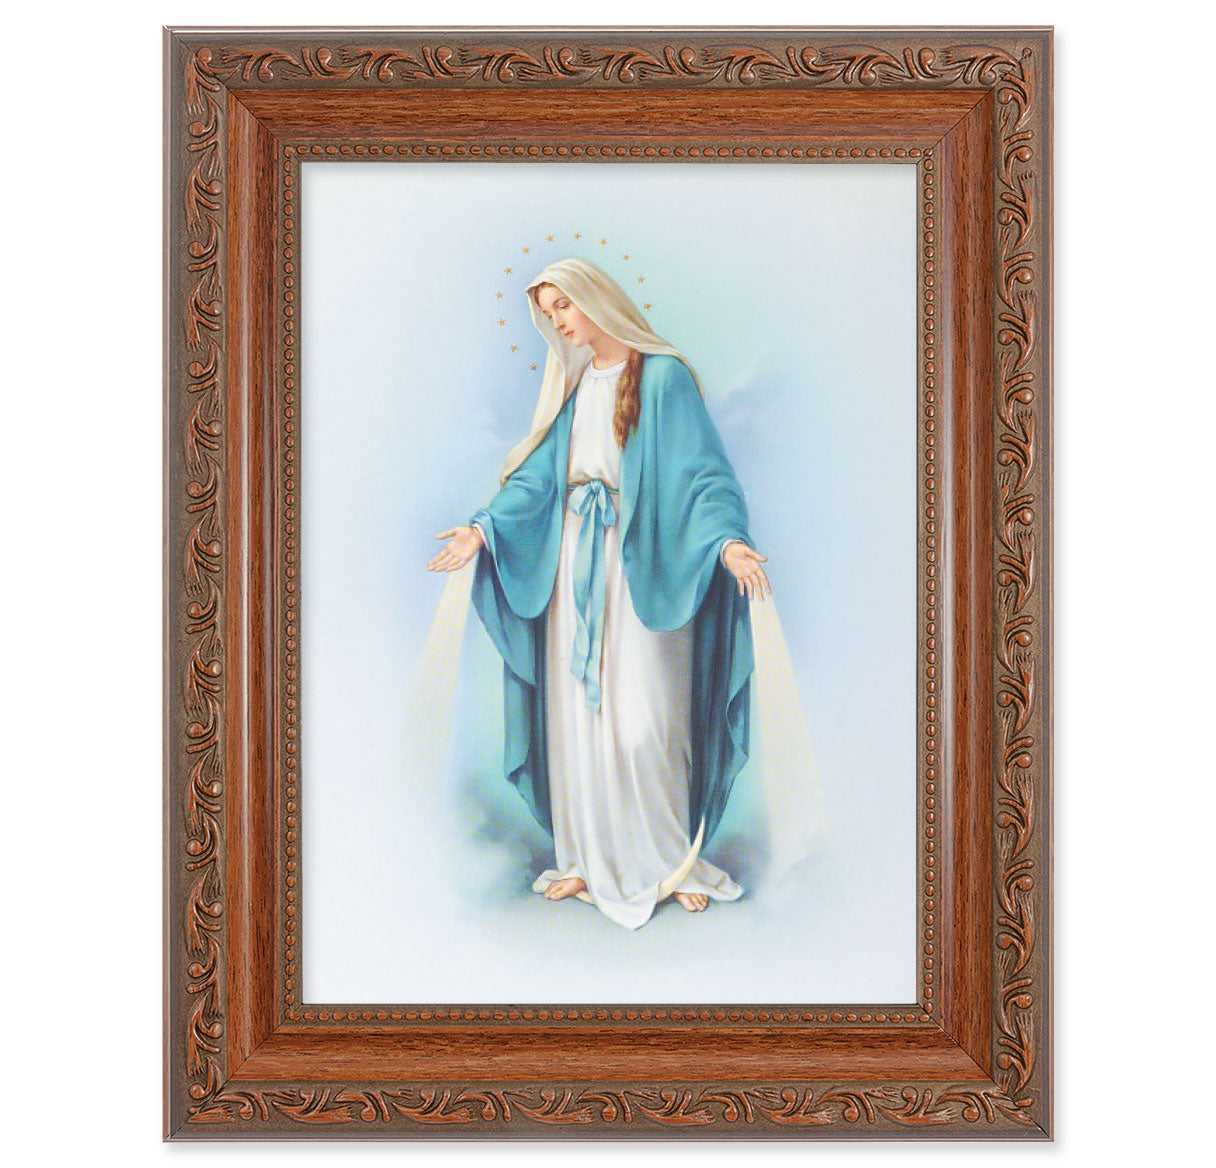 Our Lady of Grace Mahogany Finish Framed Art